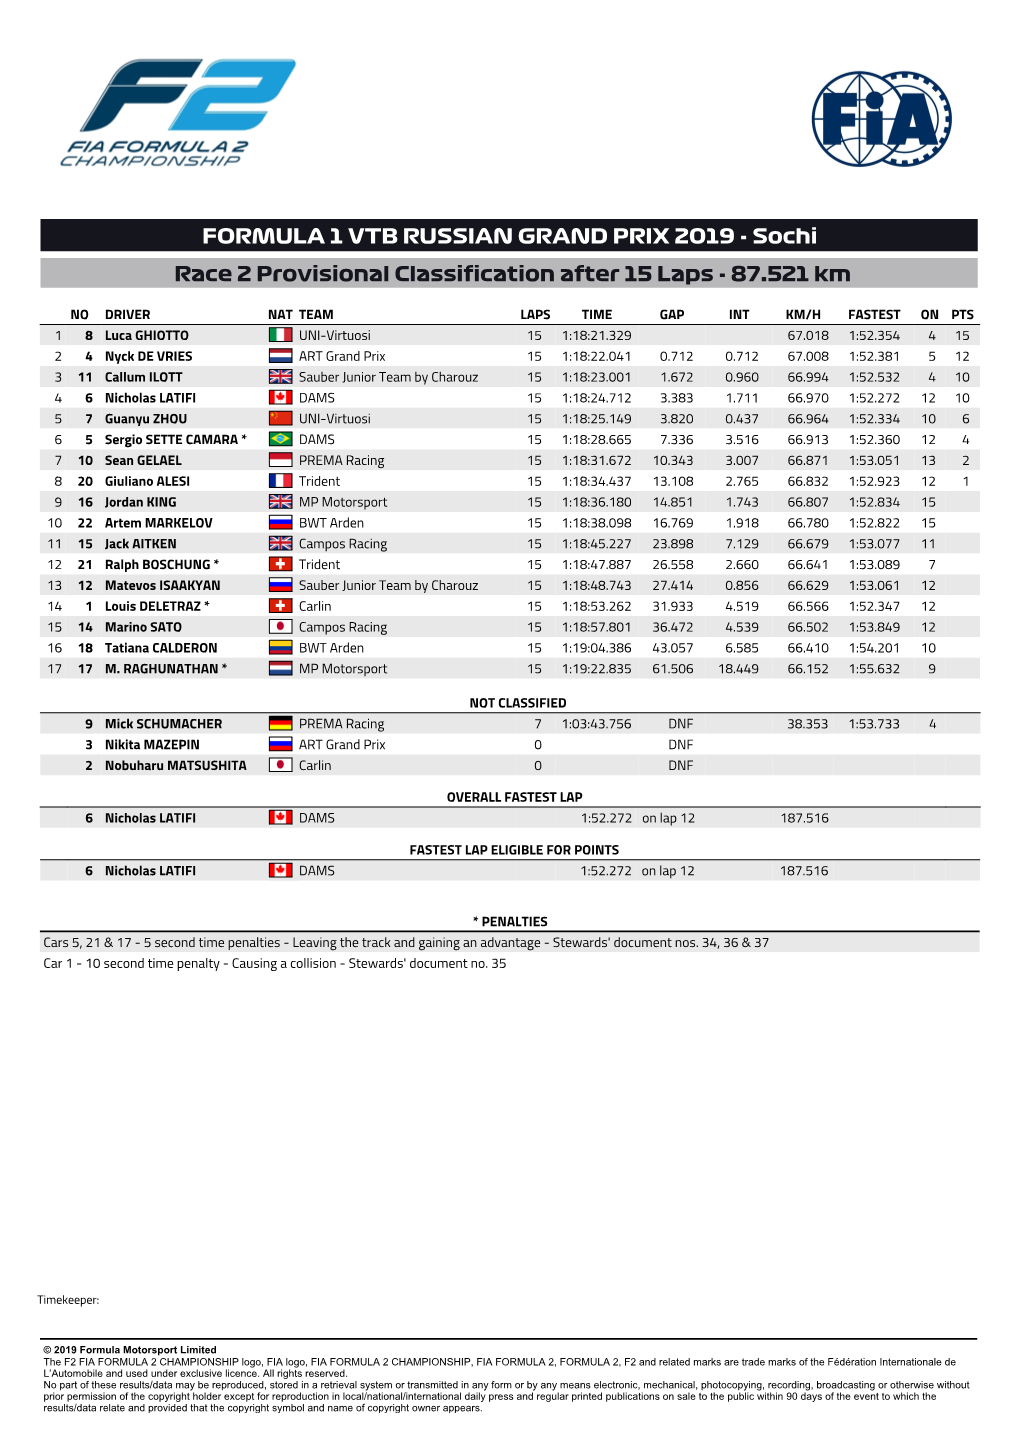 FORMULA 1 VTB RUSSIAN GRAND PRIX 2019 - Sochi Race 2 Provisional Classification After 15 Laps - 87.521 Km